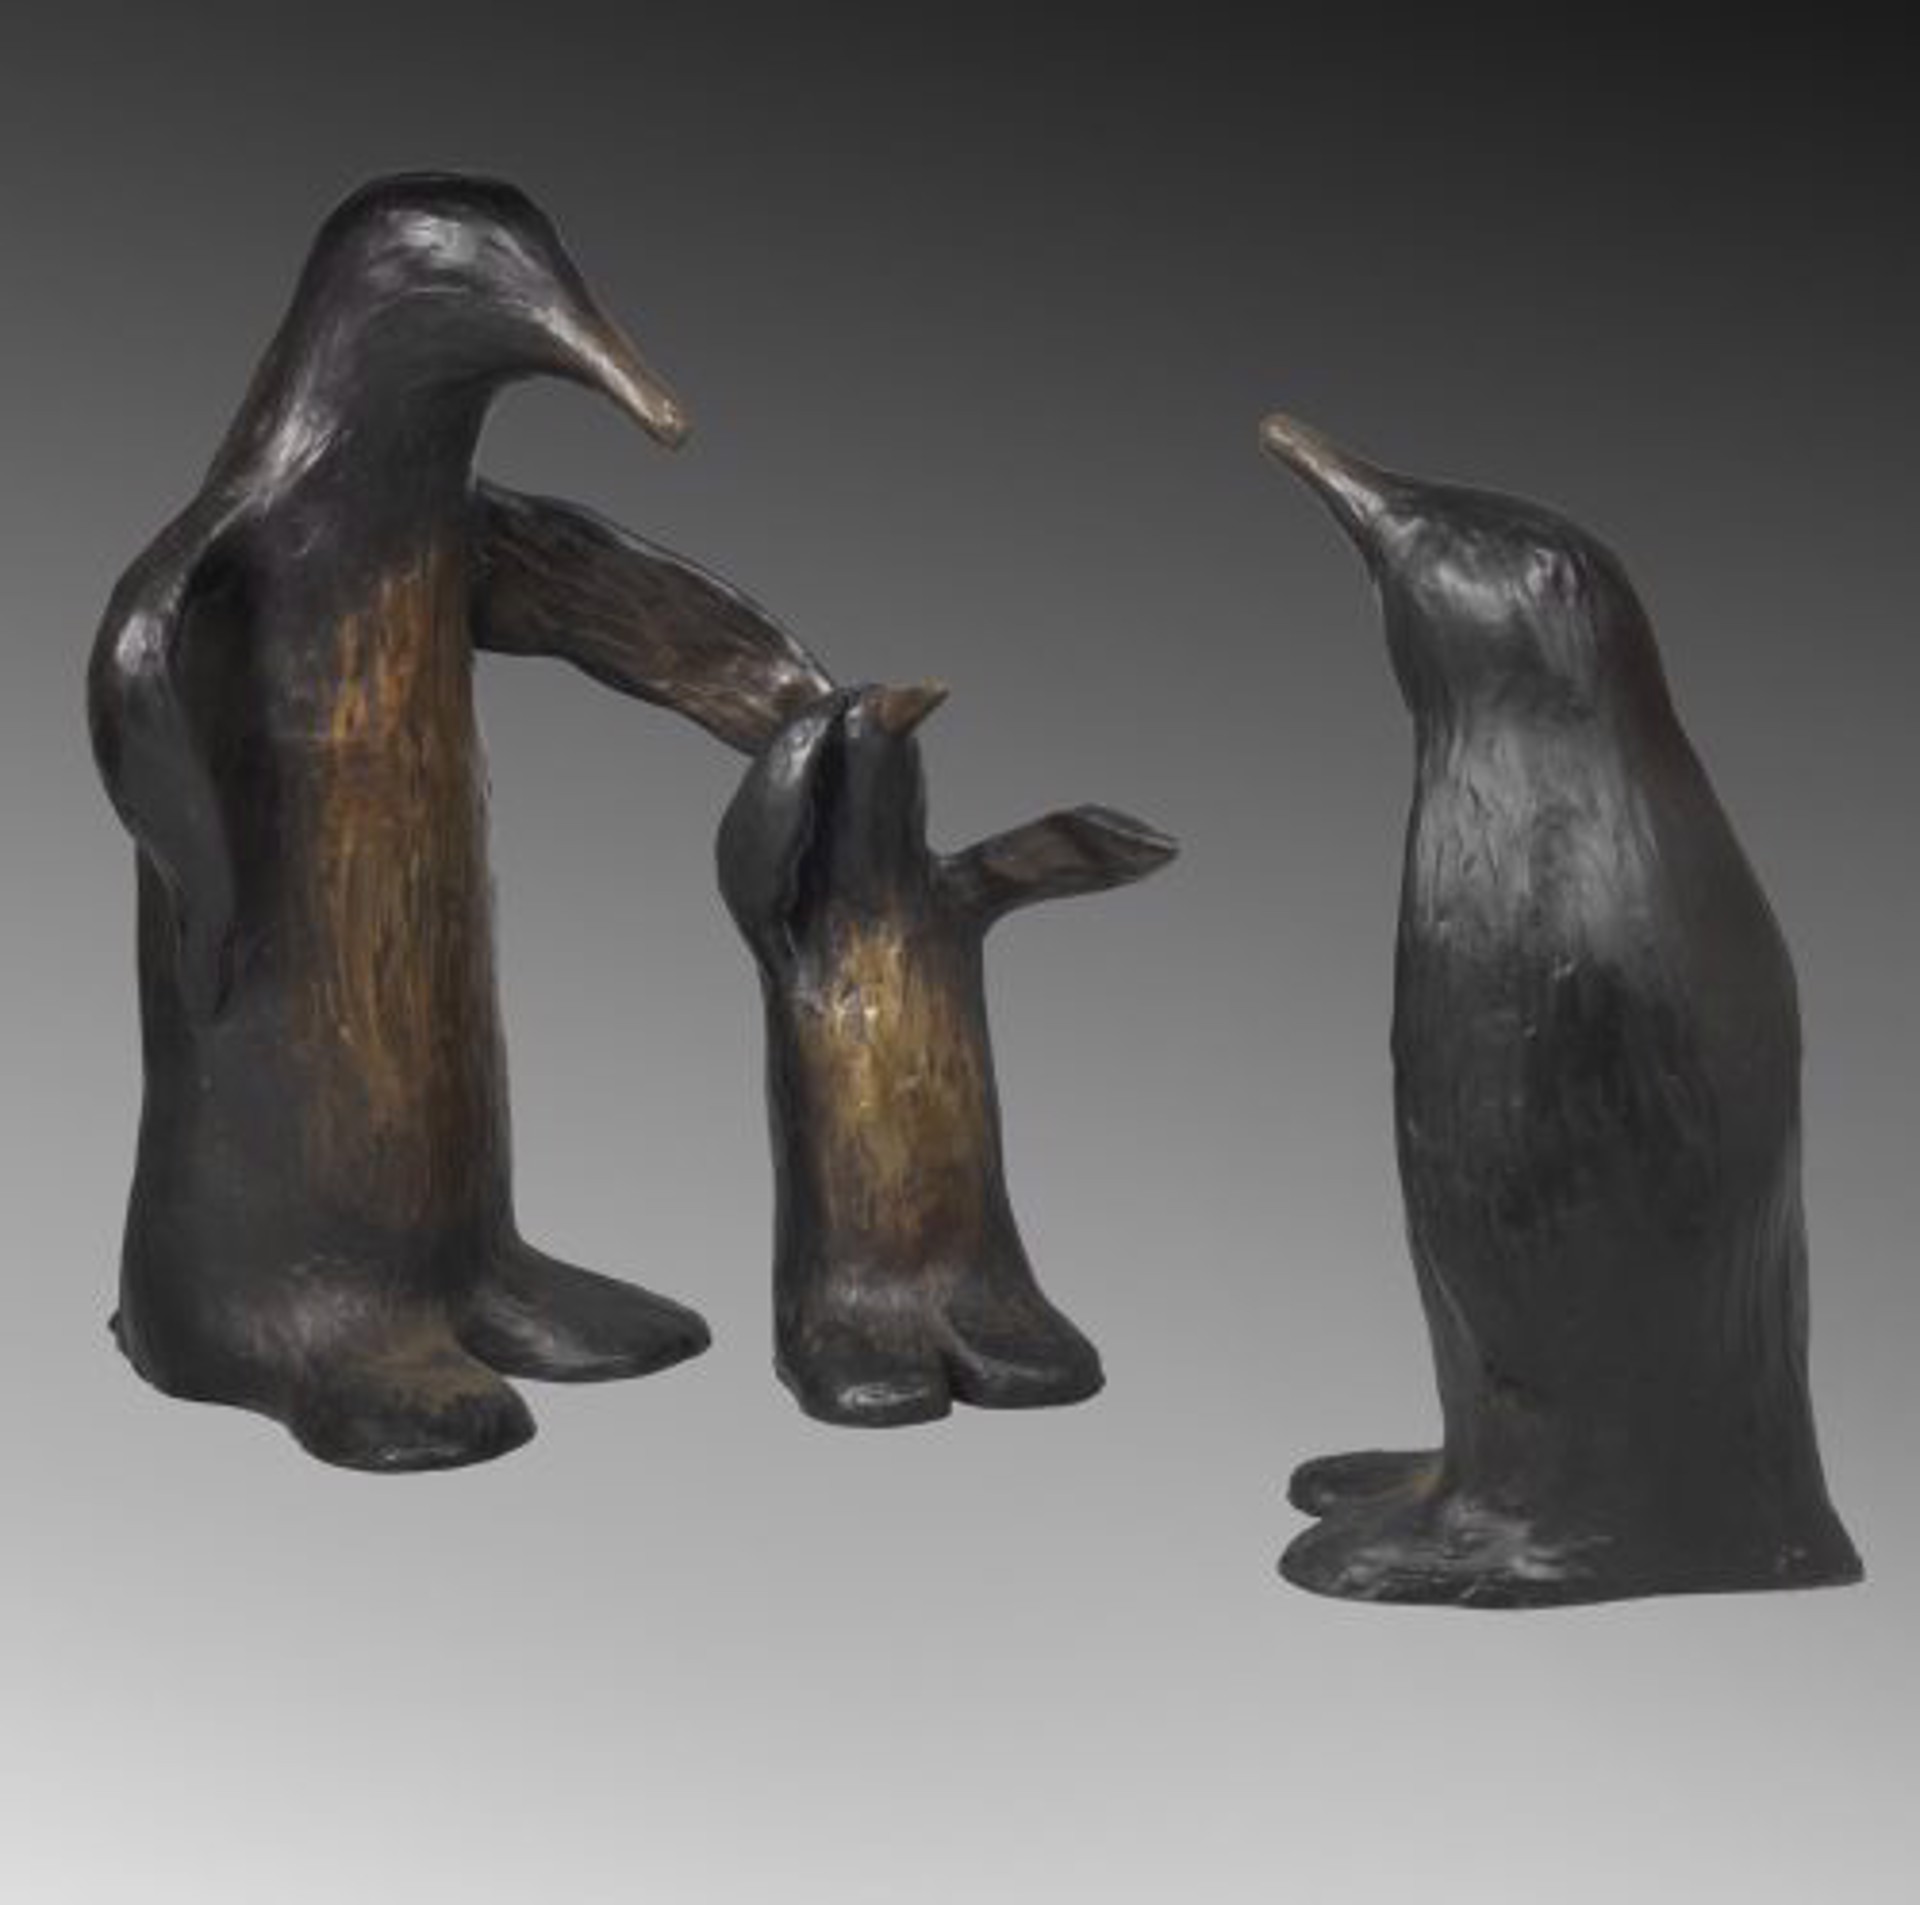 Penguin Family - Small by Jim Budish